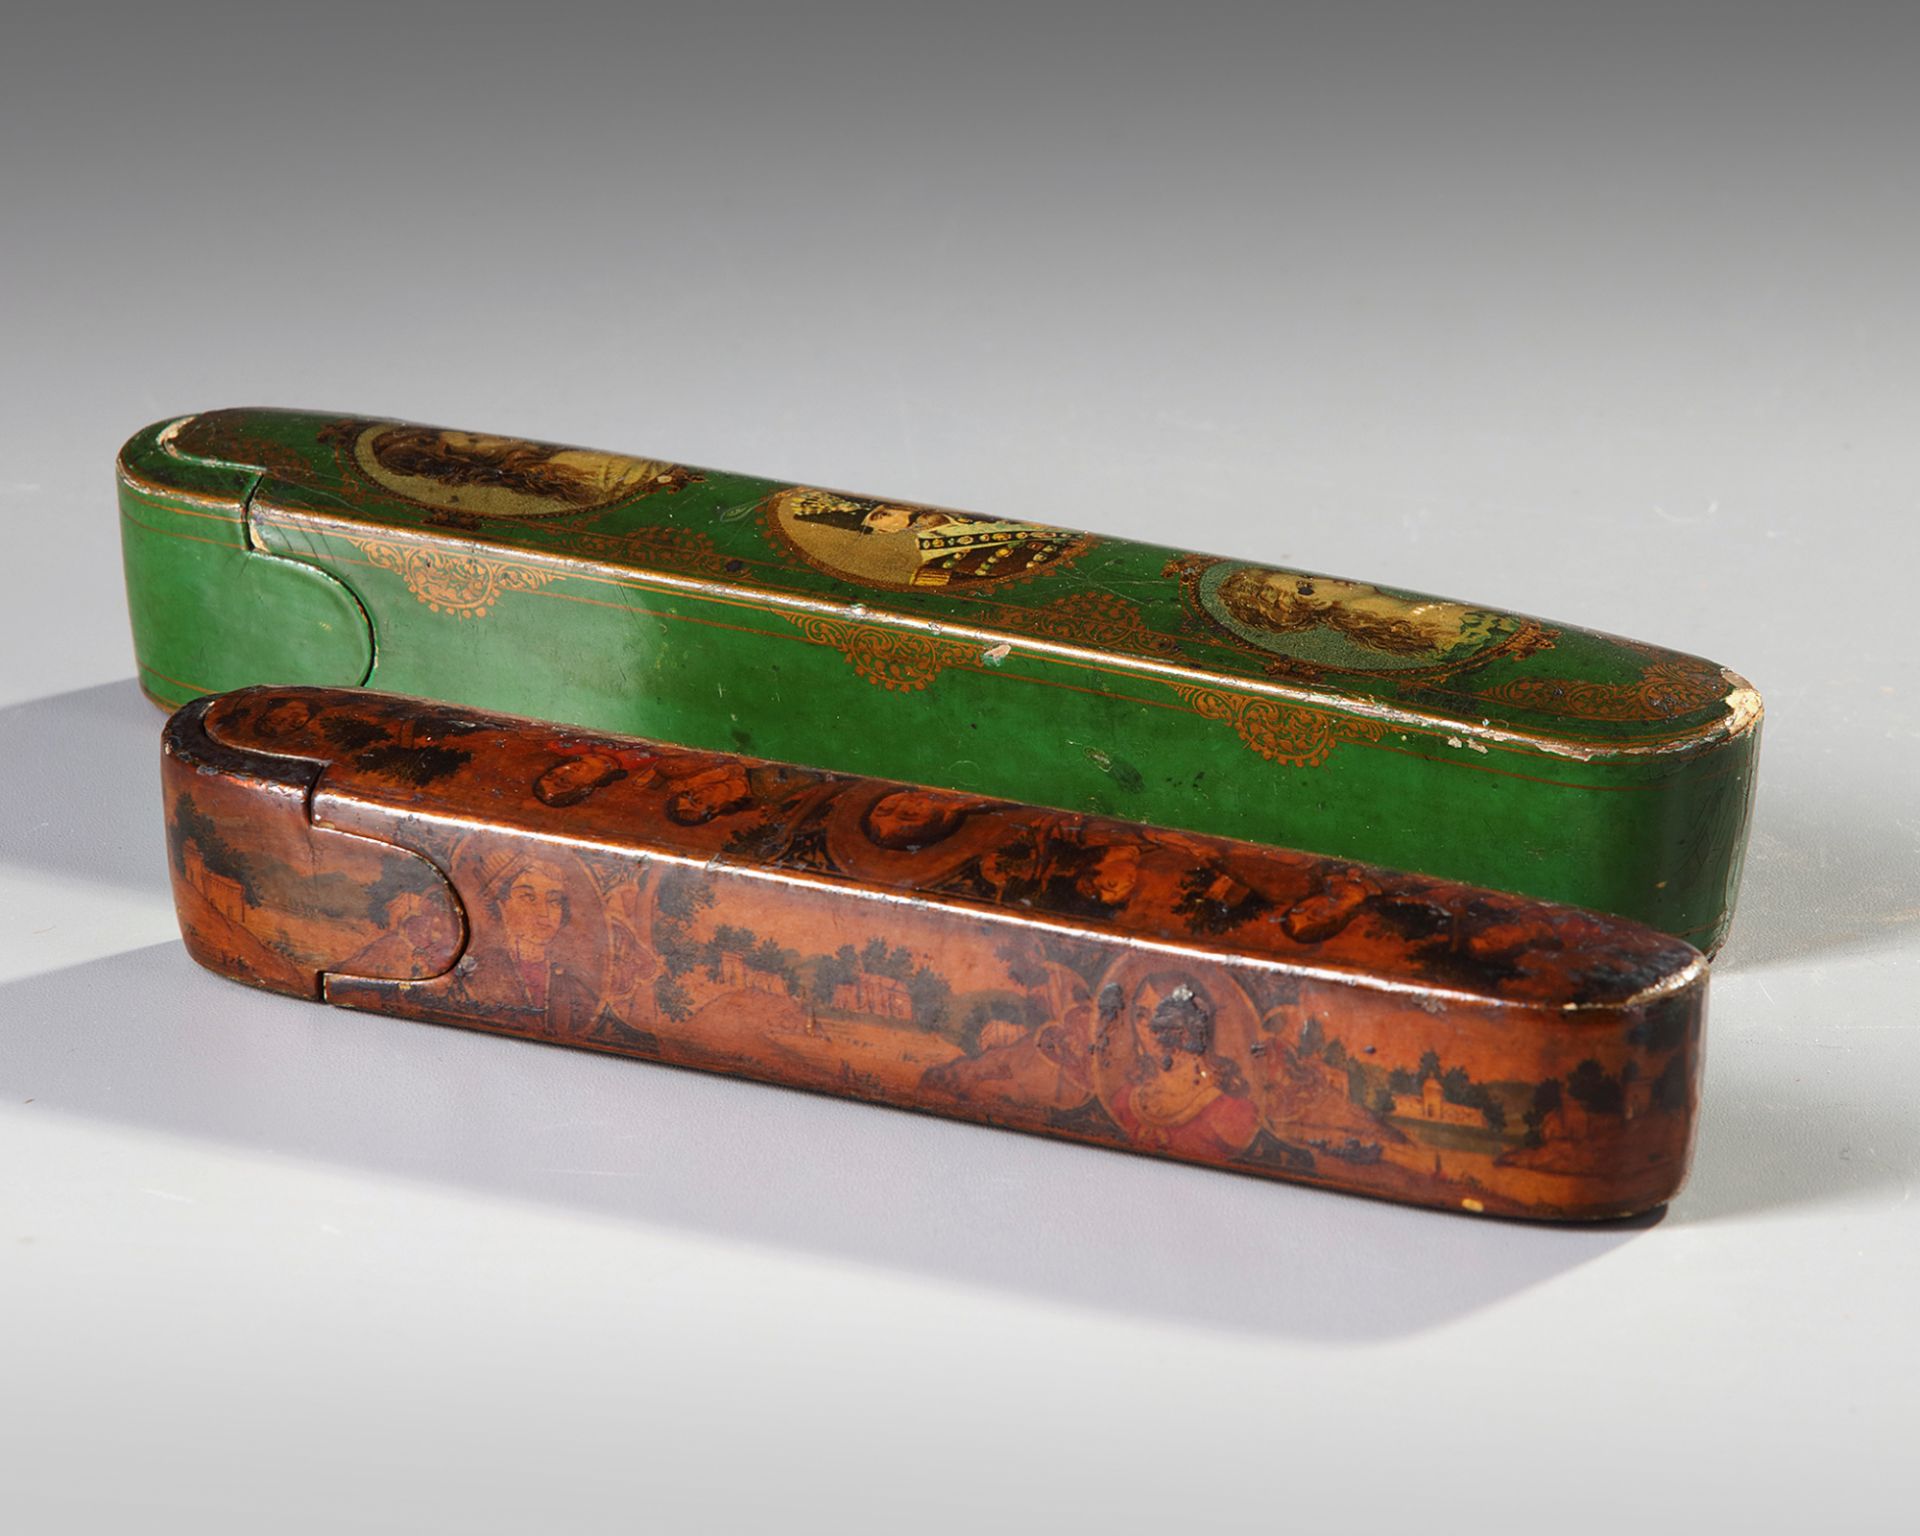 Two Ottoman lacquer paper mache pen cases - Image 2 of 2